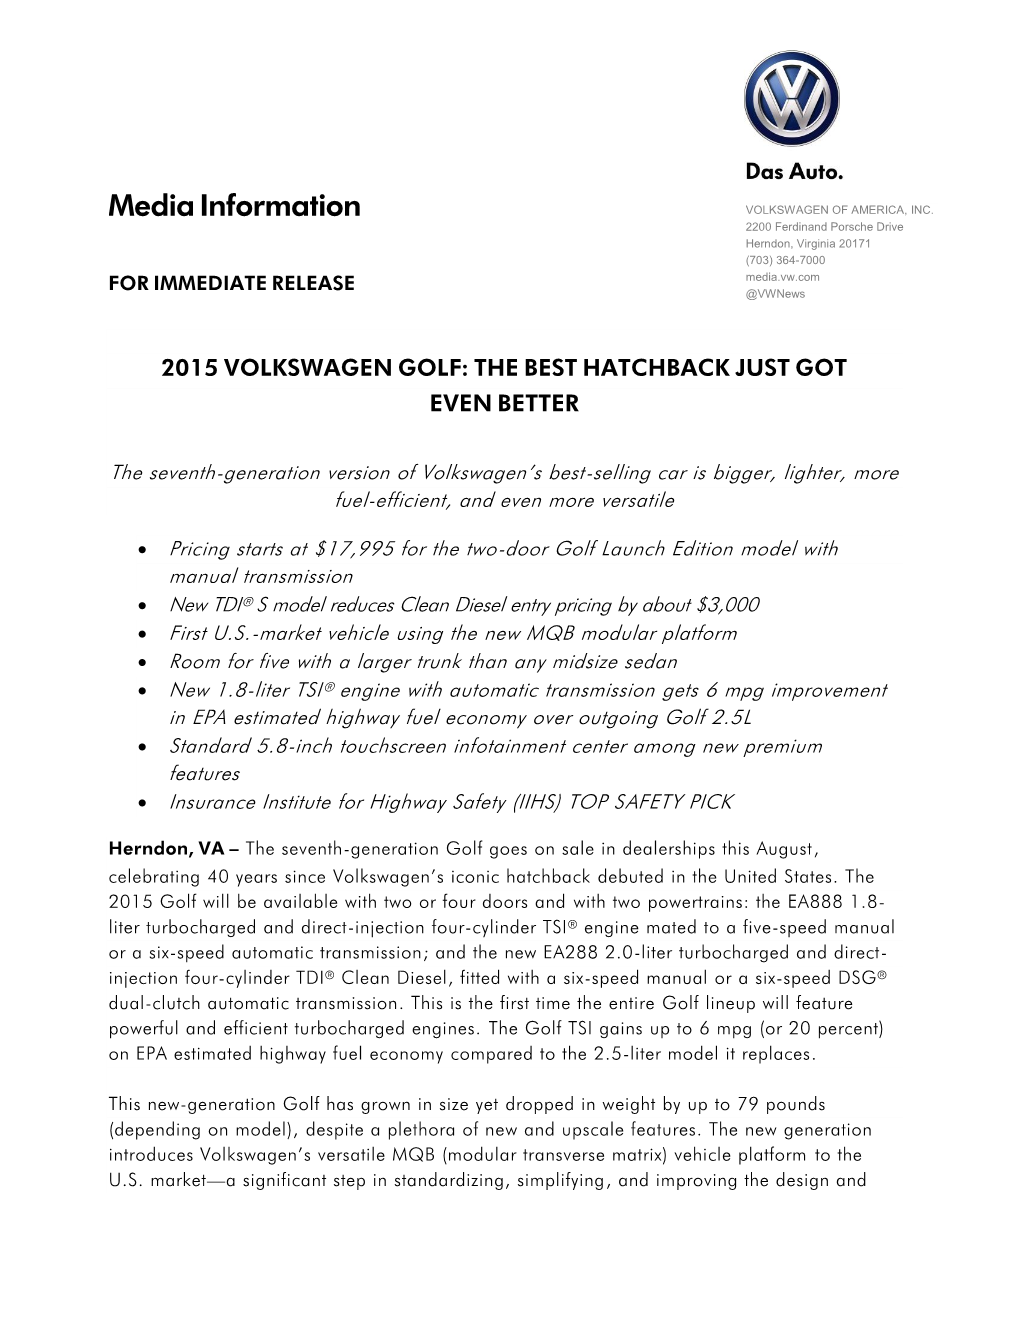 2015.5 Golf Release